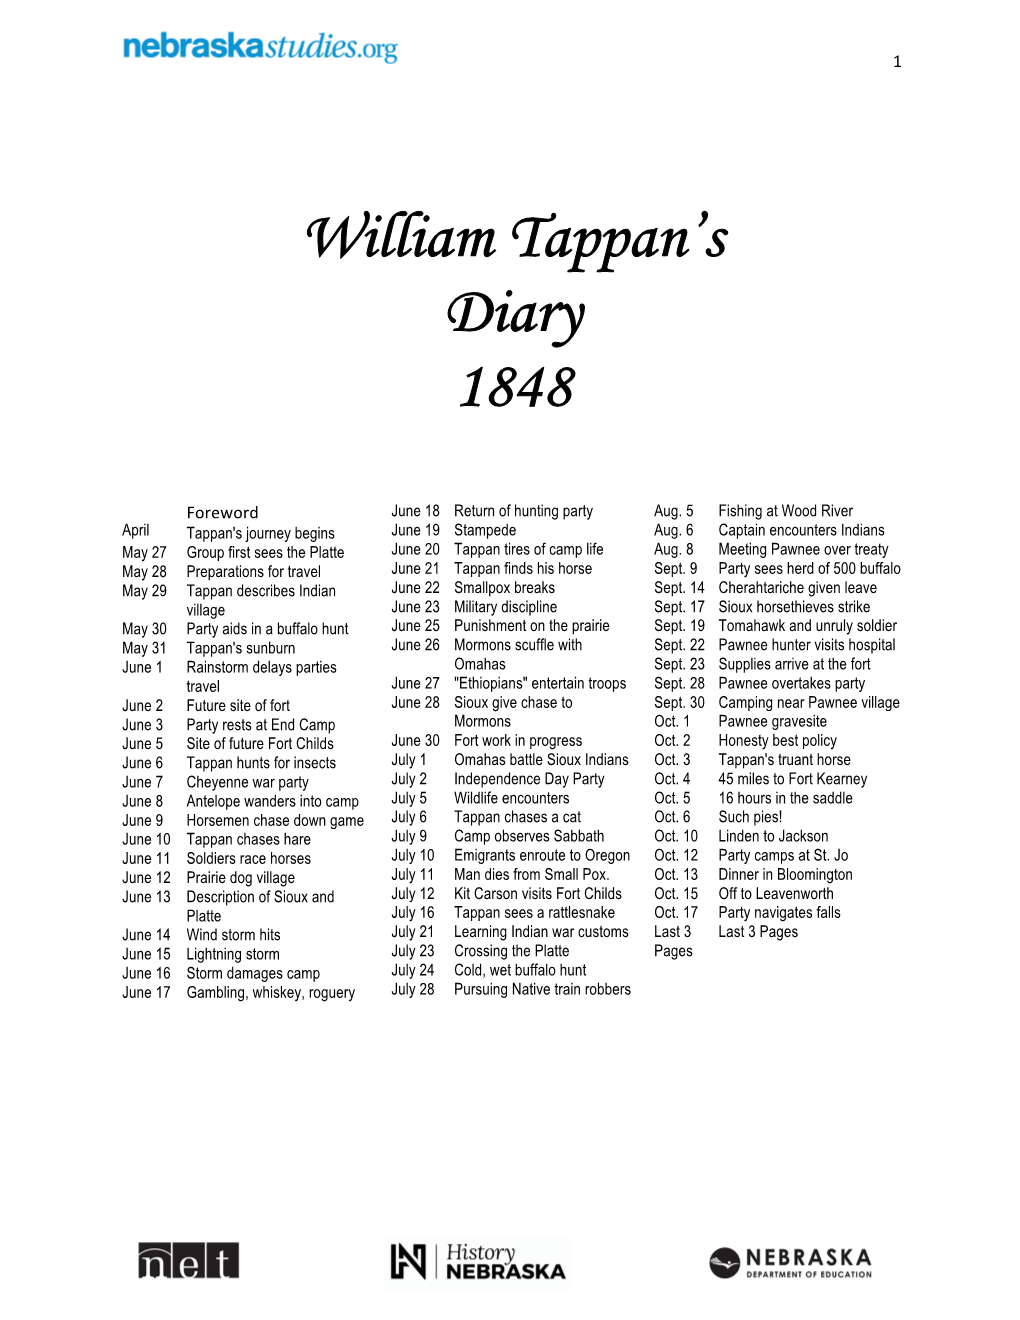 William Tappan's Diary 1848